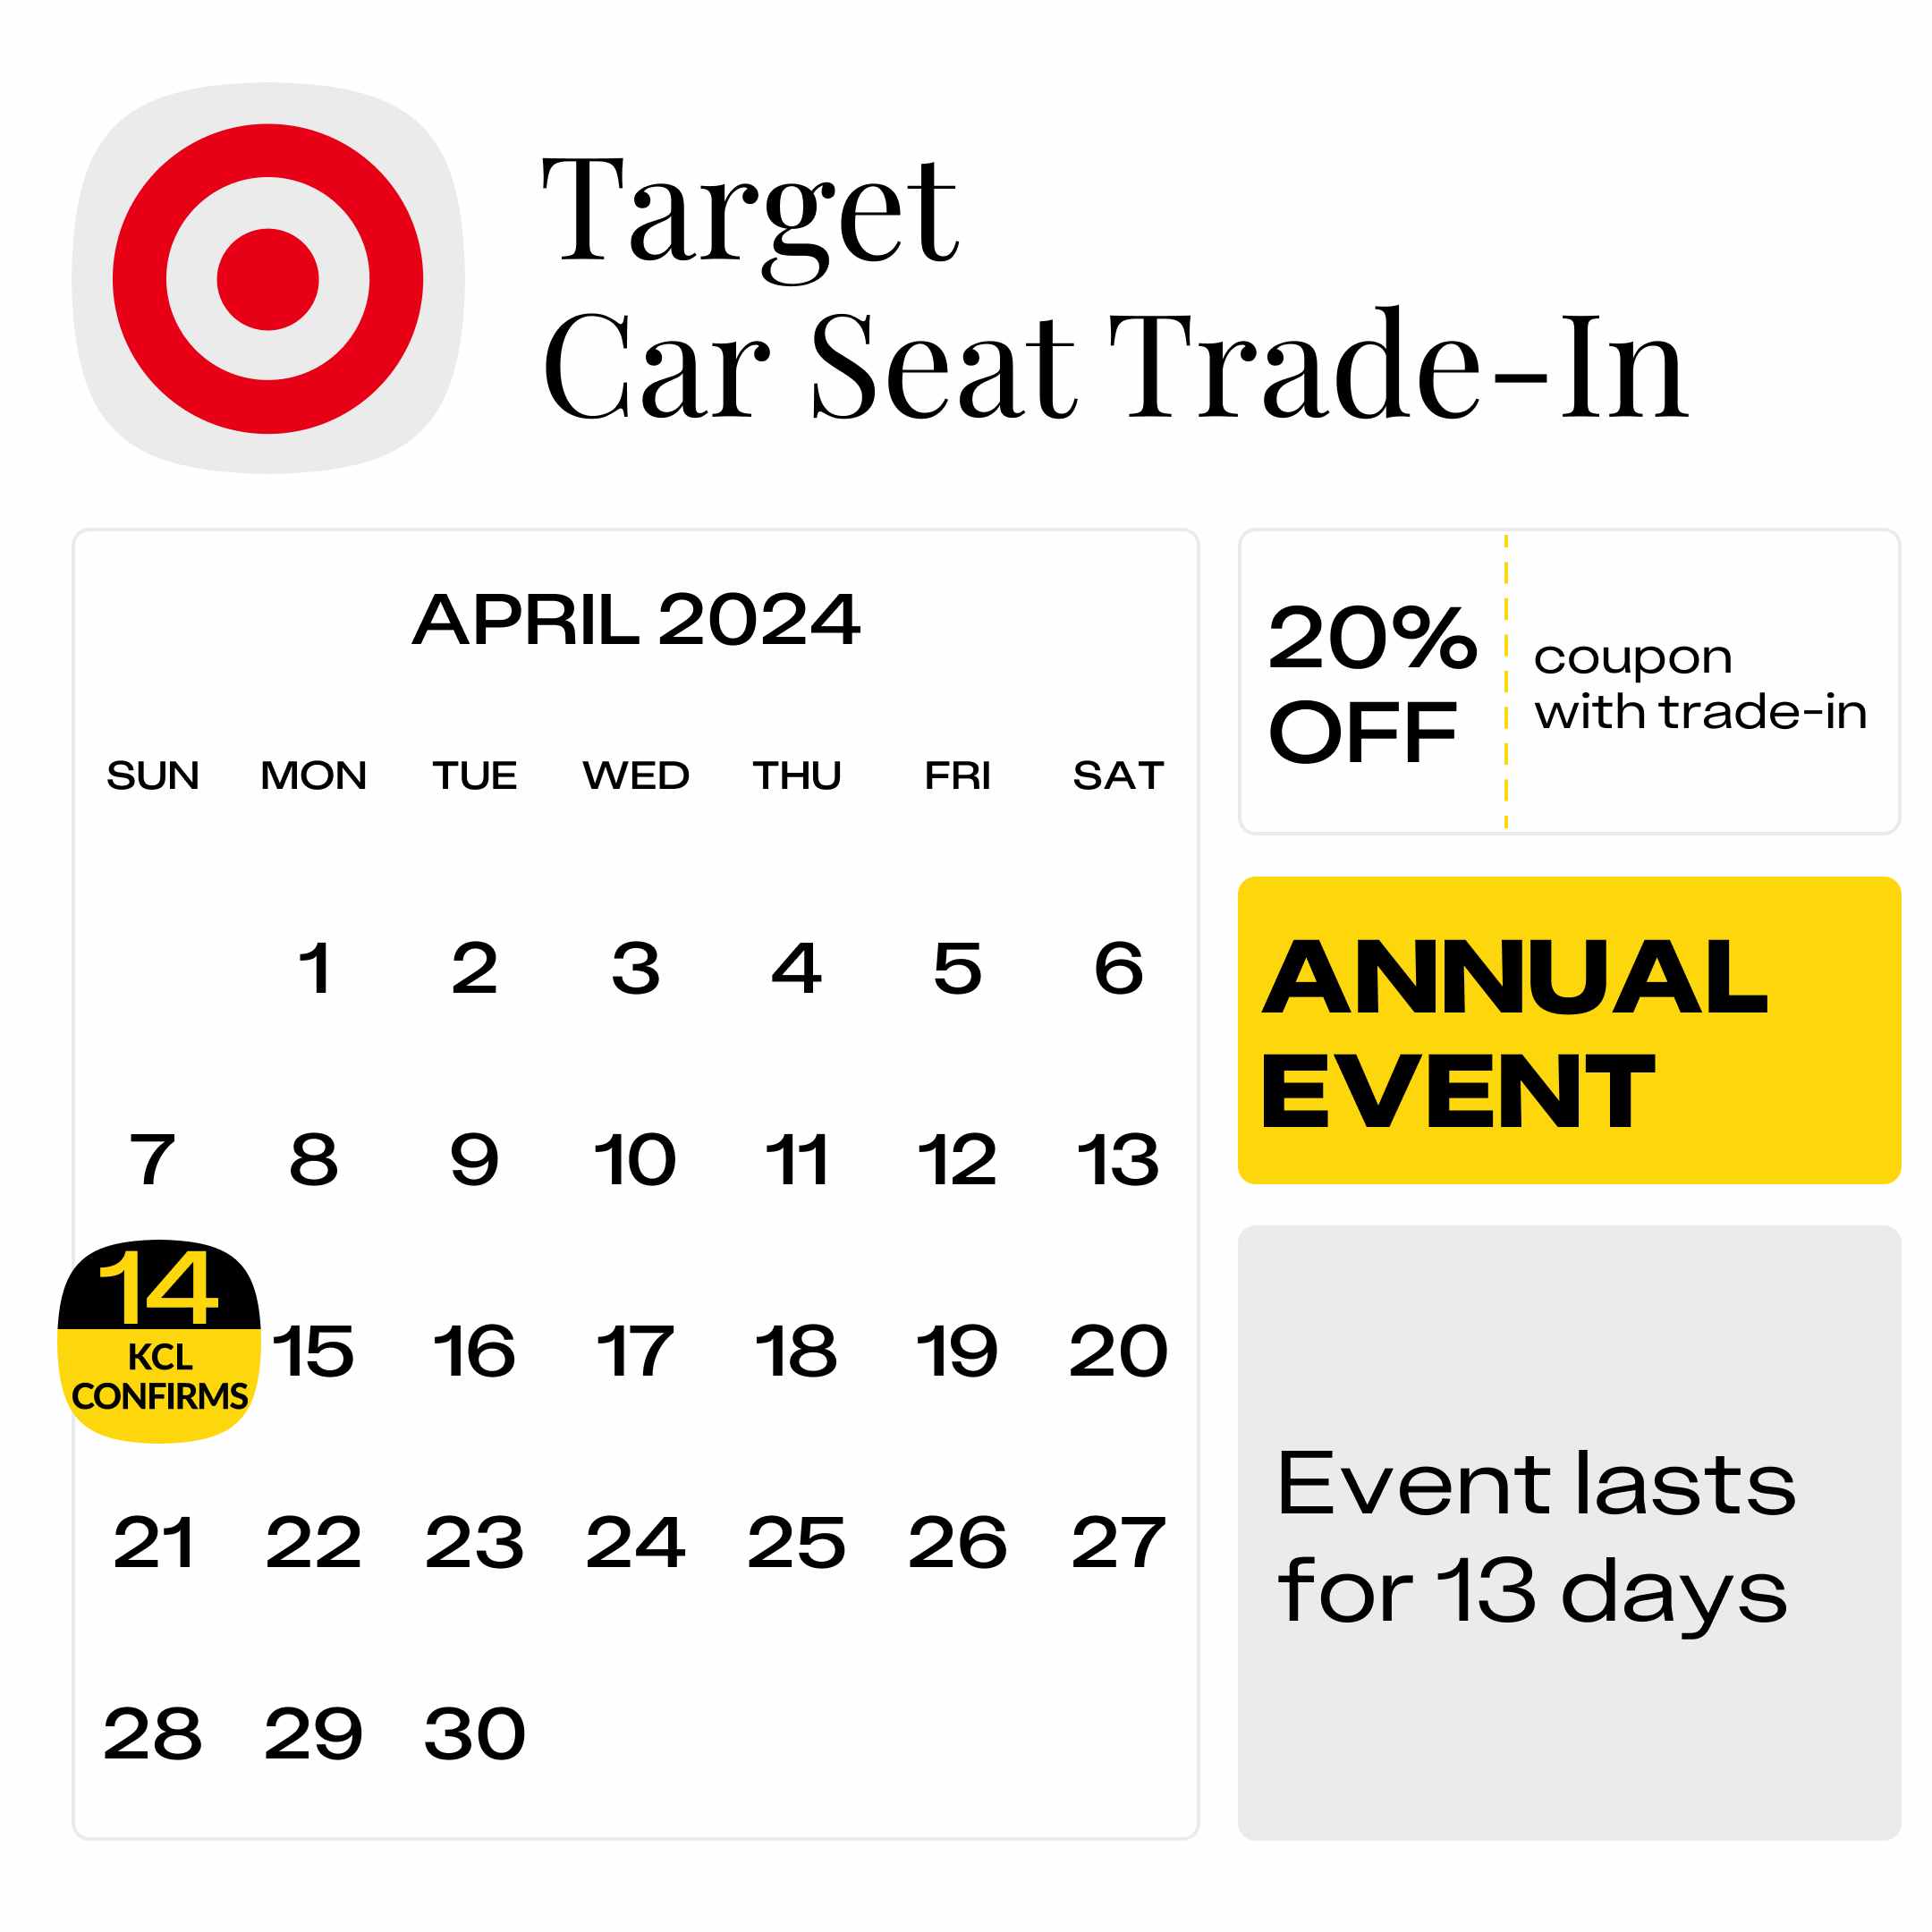 Confirmed Target Car Seat Trade-In 2024 Dates: April 14-27, 2024